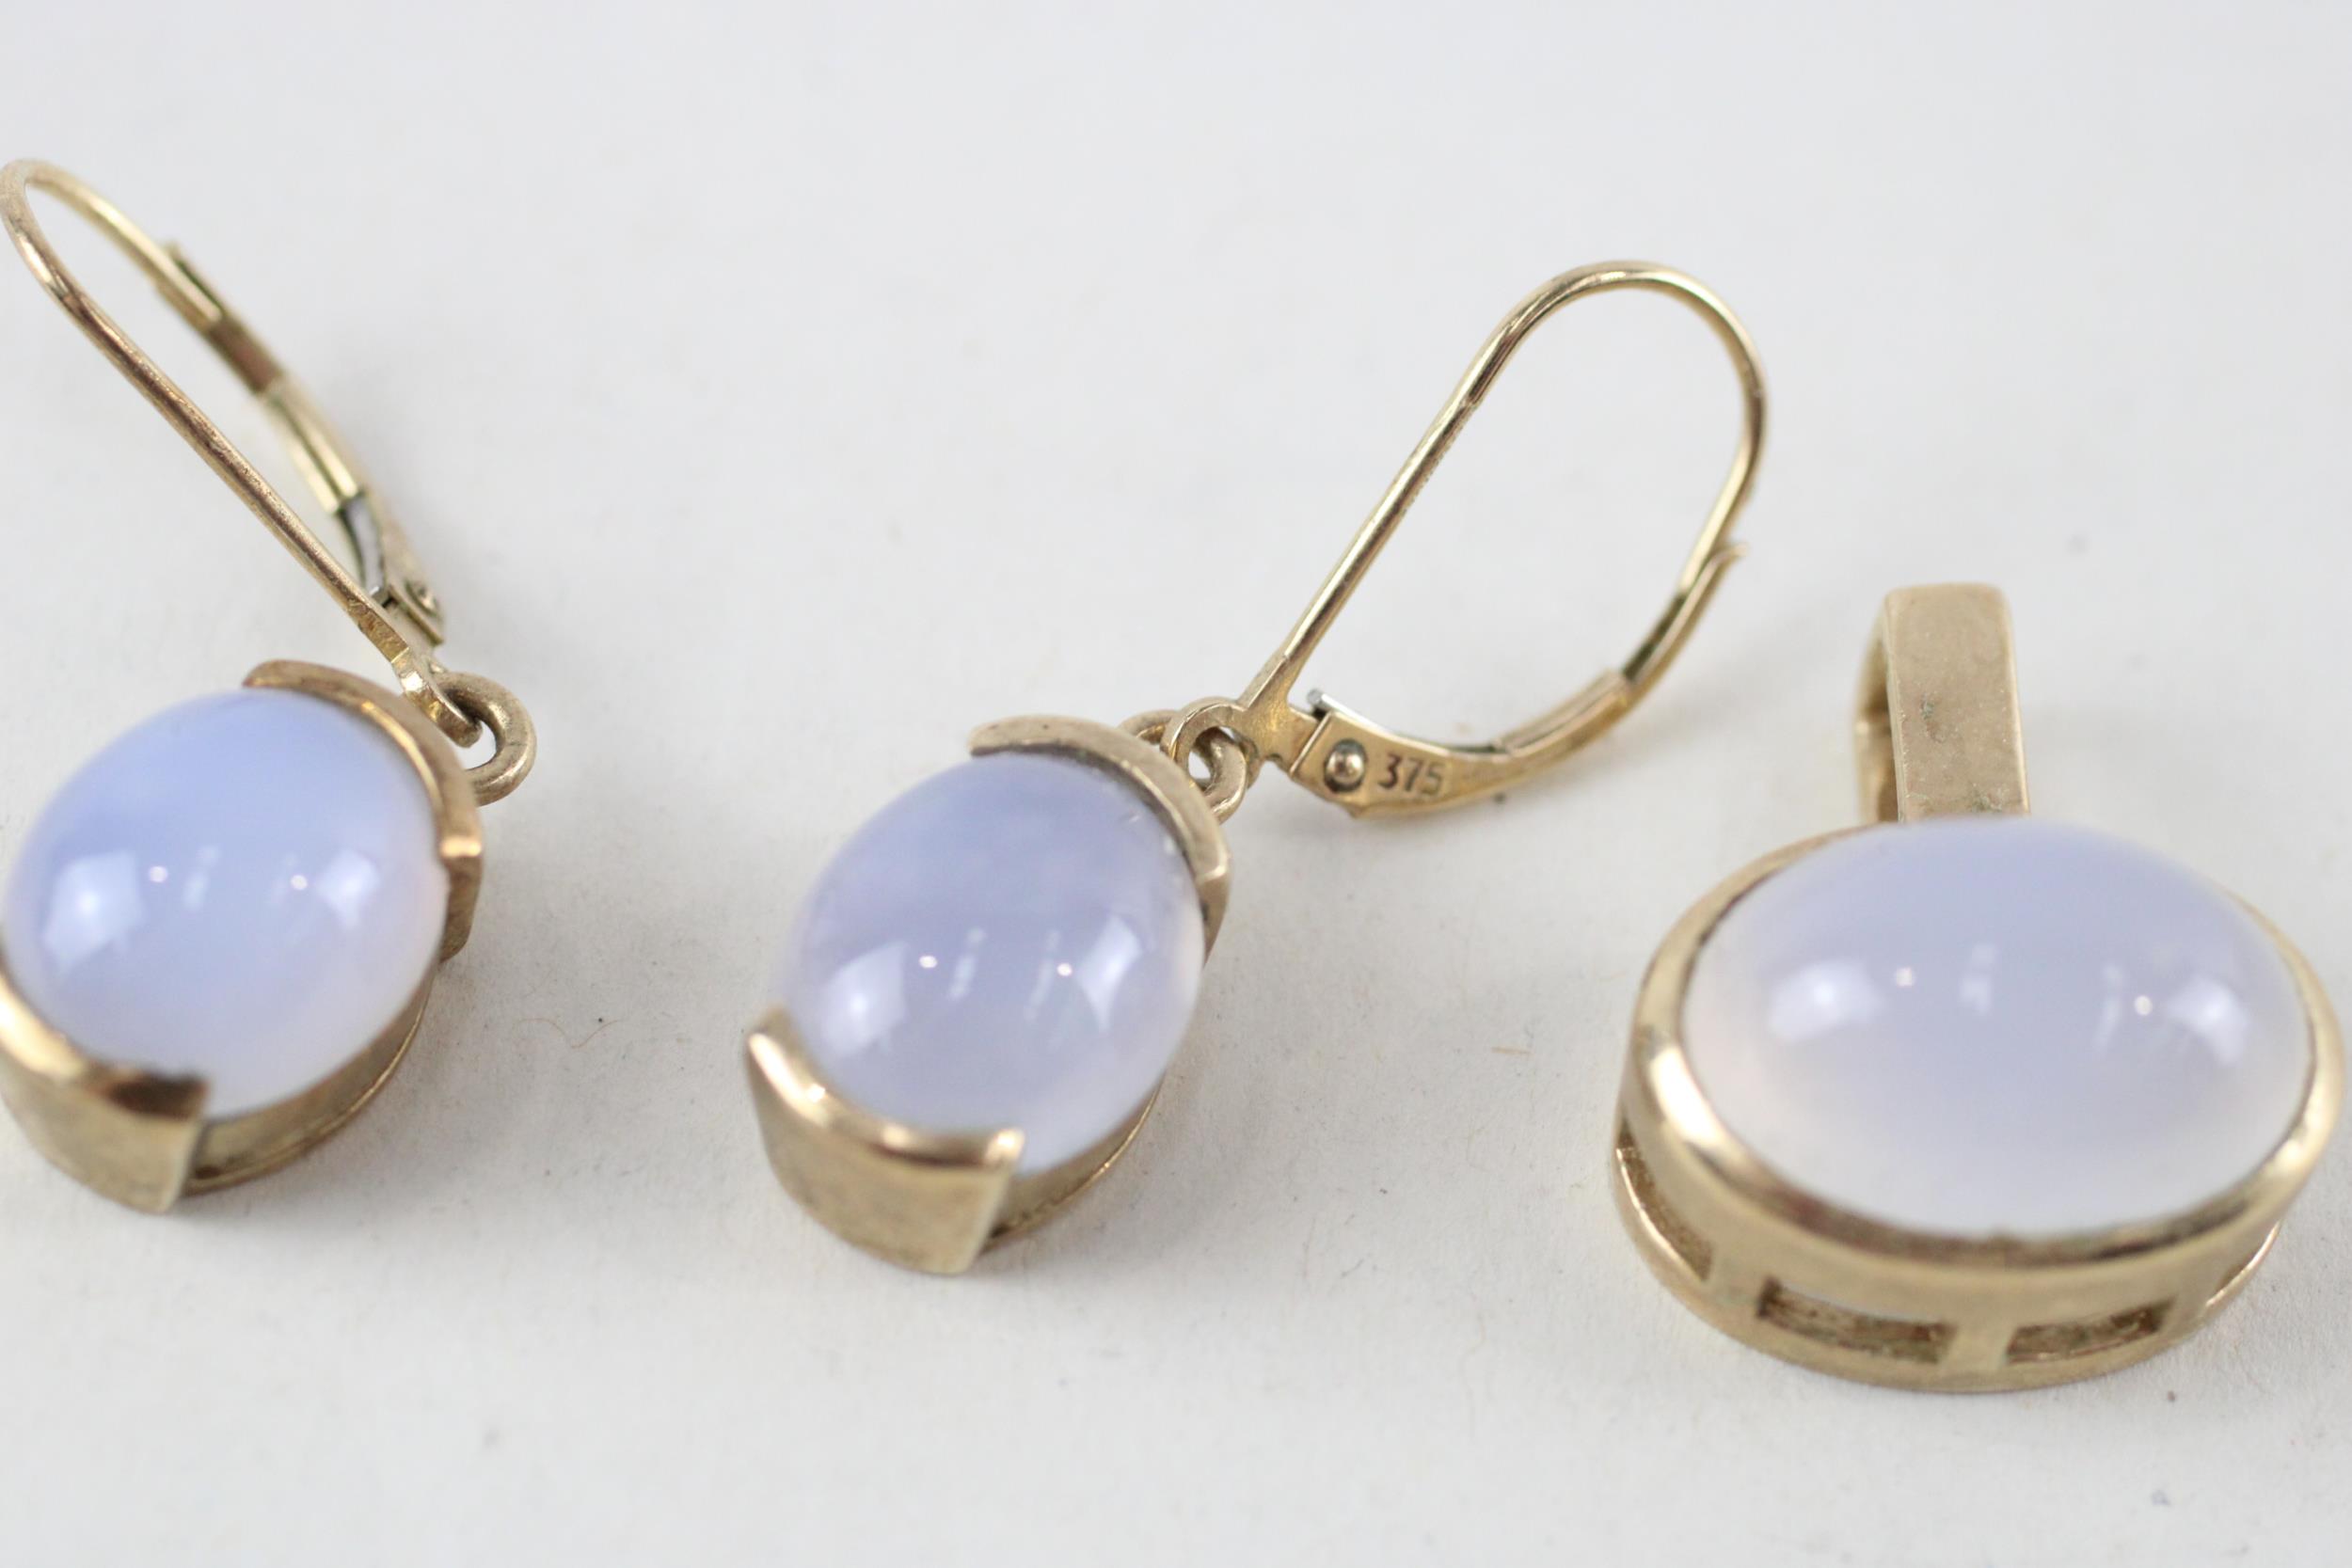 9ct gold chalcedony pendant & earrings set (9.1g) - Image 3 of 4